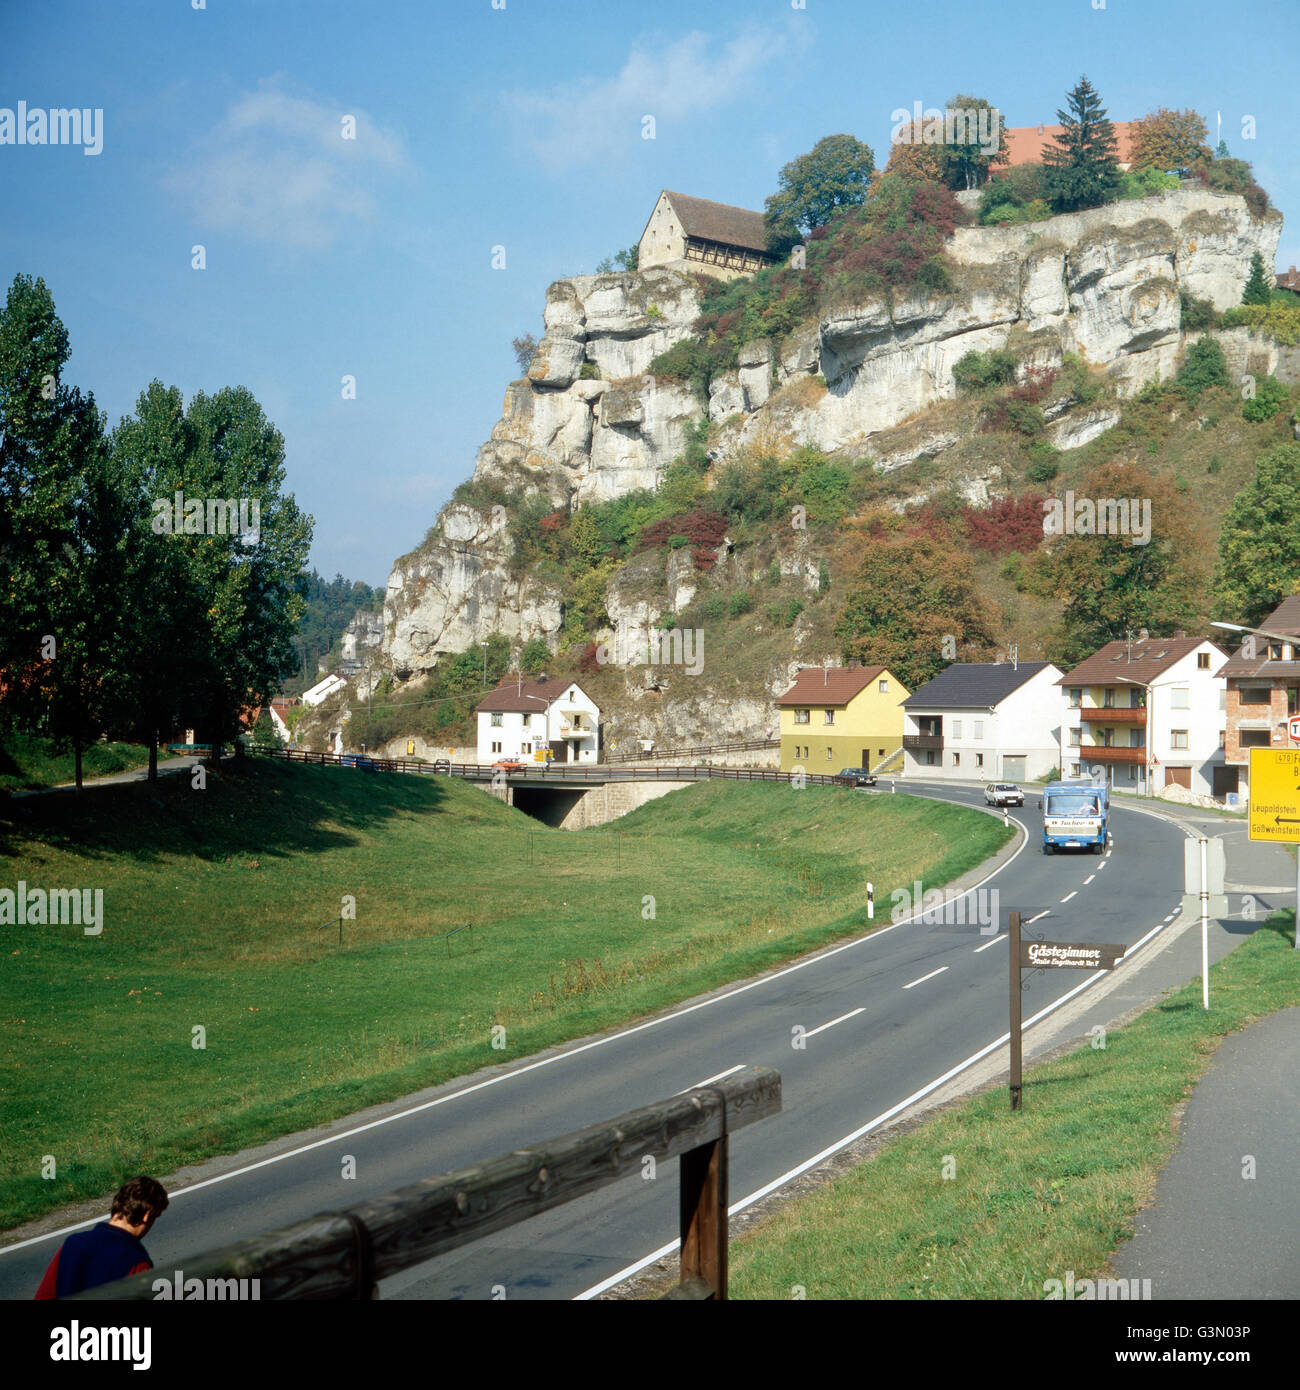 Reise durch Franken, Deutschland 1980er Jahre. Viaggio attraverso la Franconia, Germania degli anni ottanta. Foto Stock